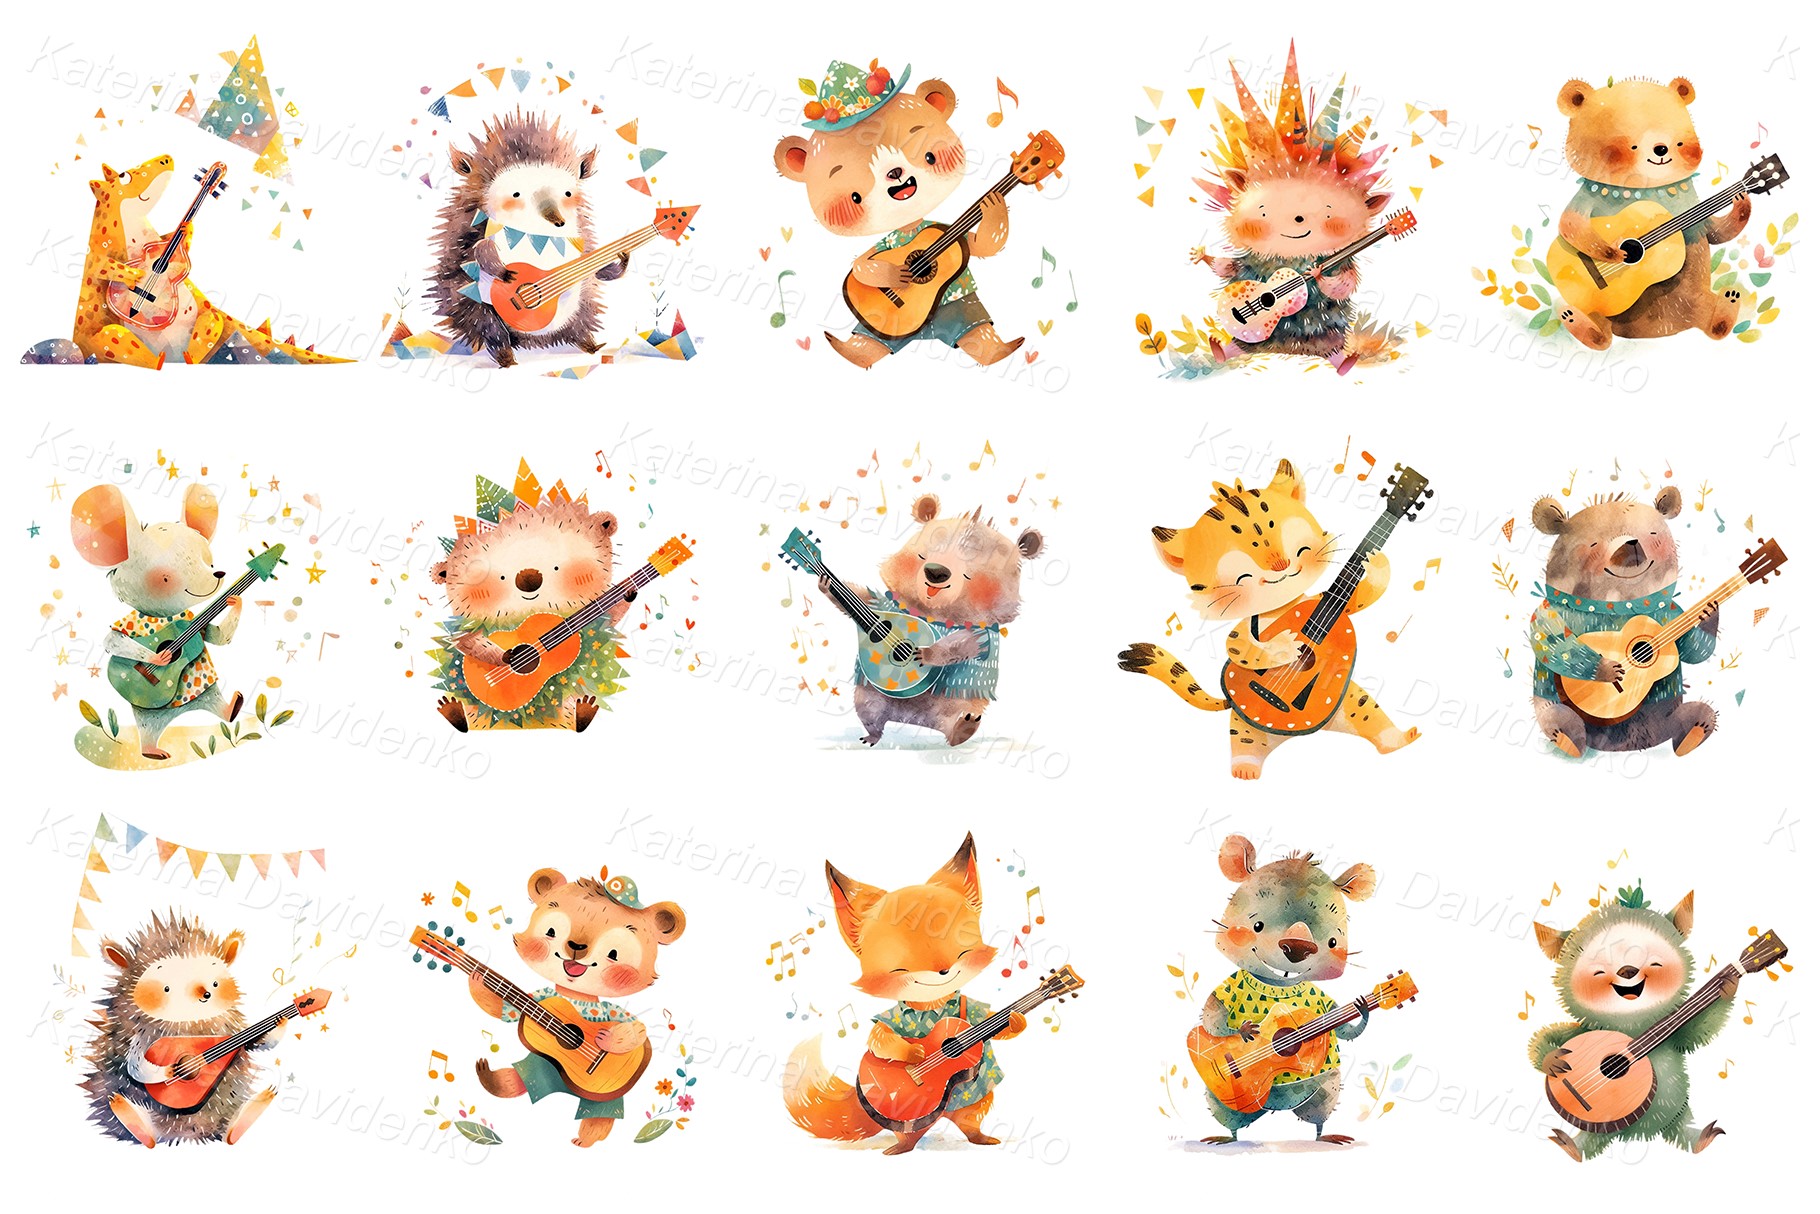 Cute cartoon animals playing guitars and singing song